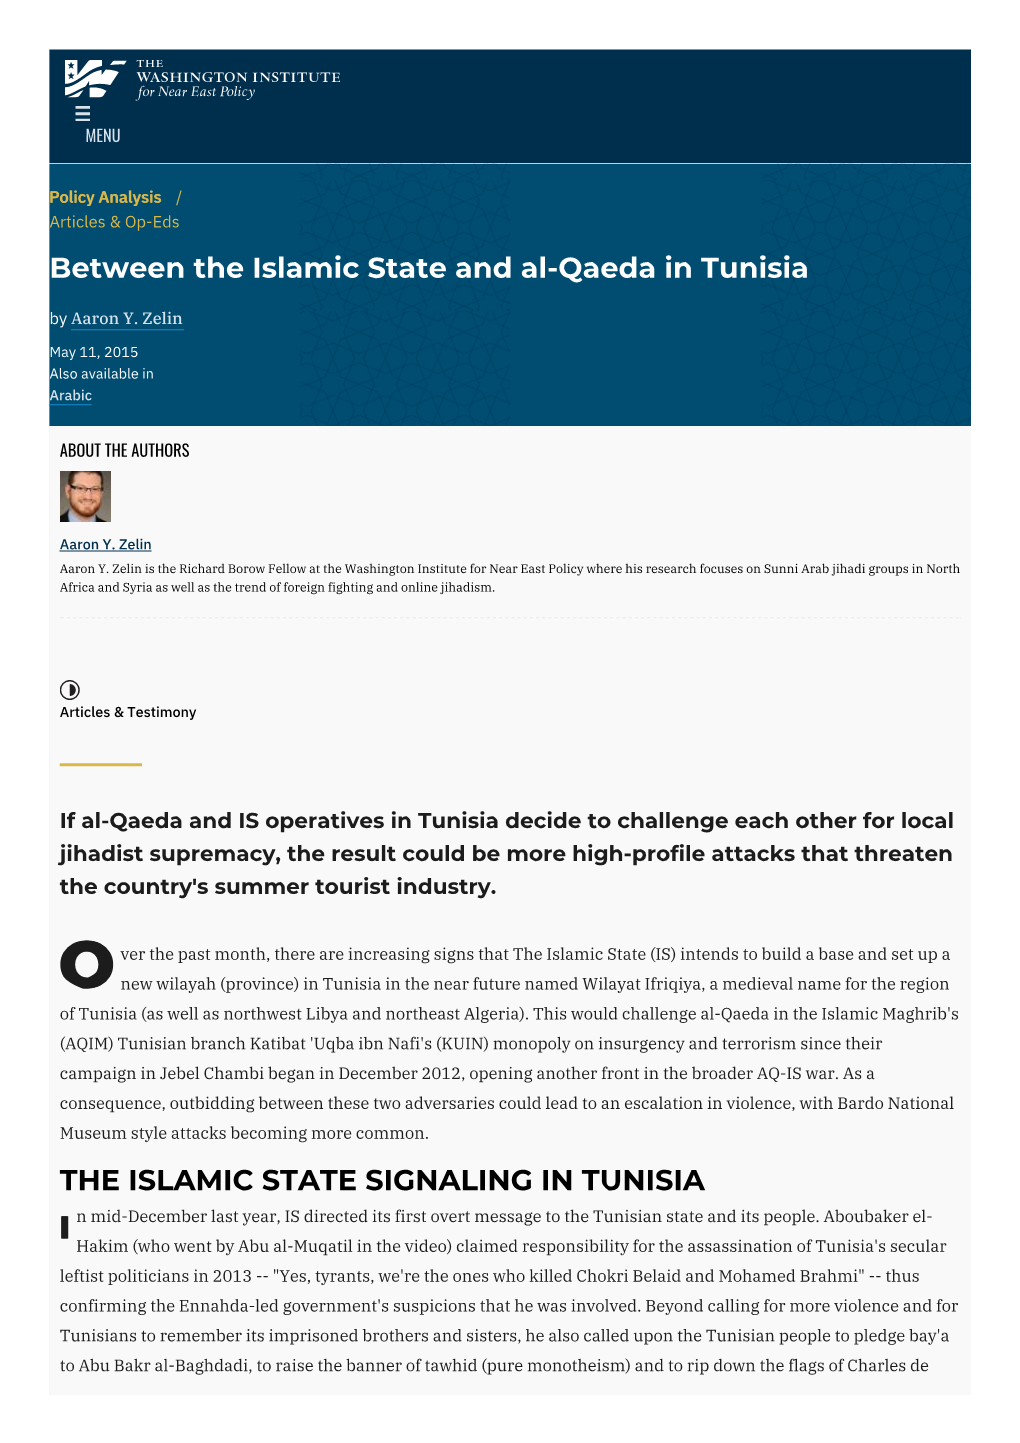 Between the Islamic State and Al-Qaeda in Tunisia by Aaron Y